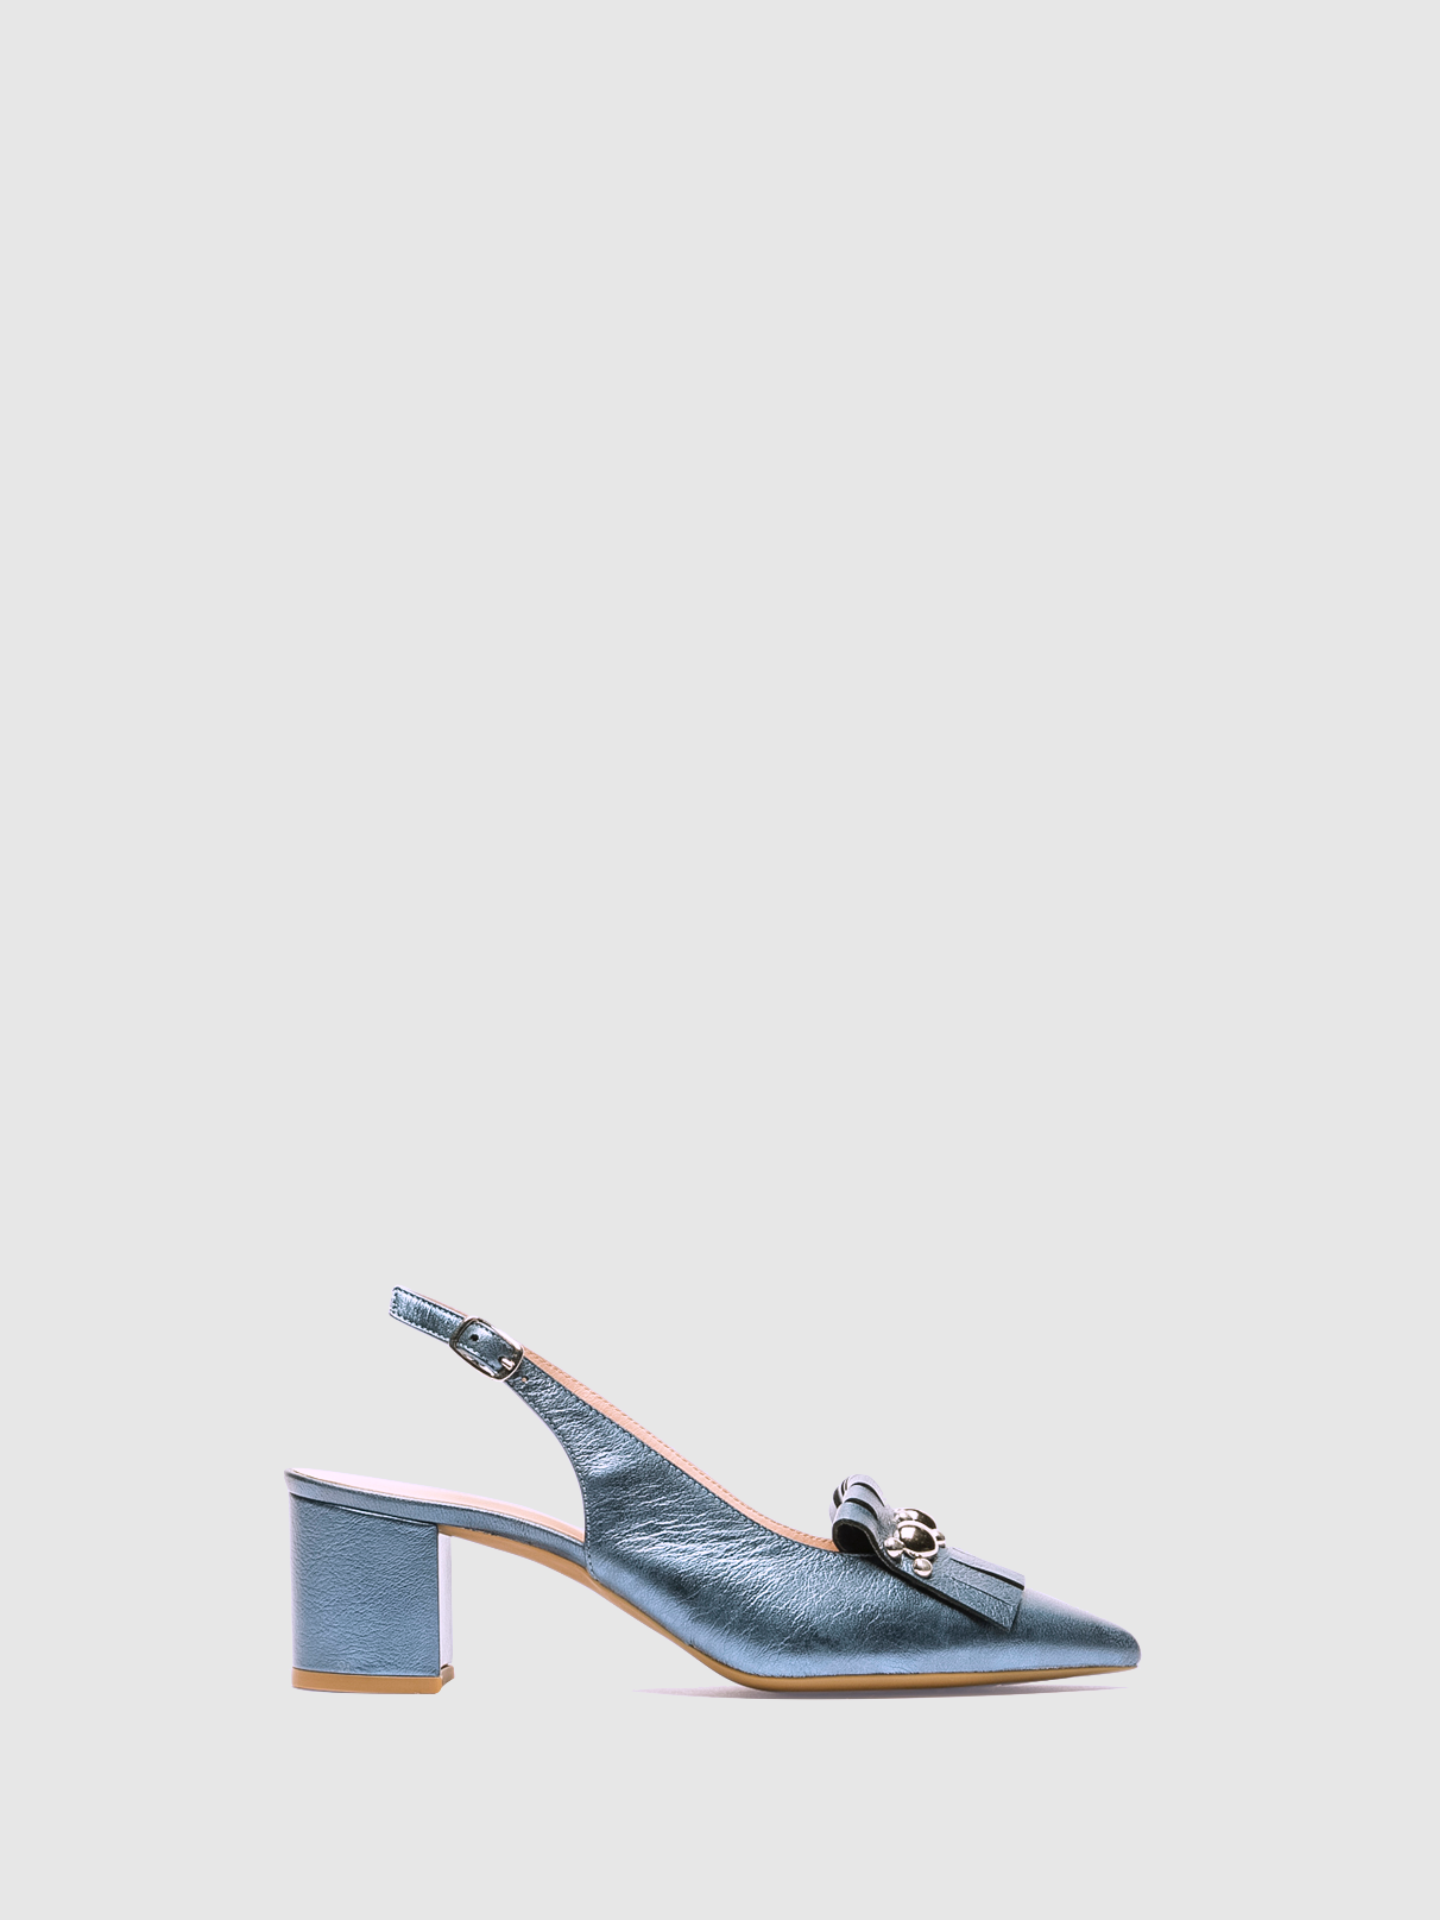 Sofia Costa Blue Sling-Back Pumps Shoes